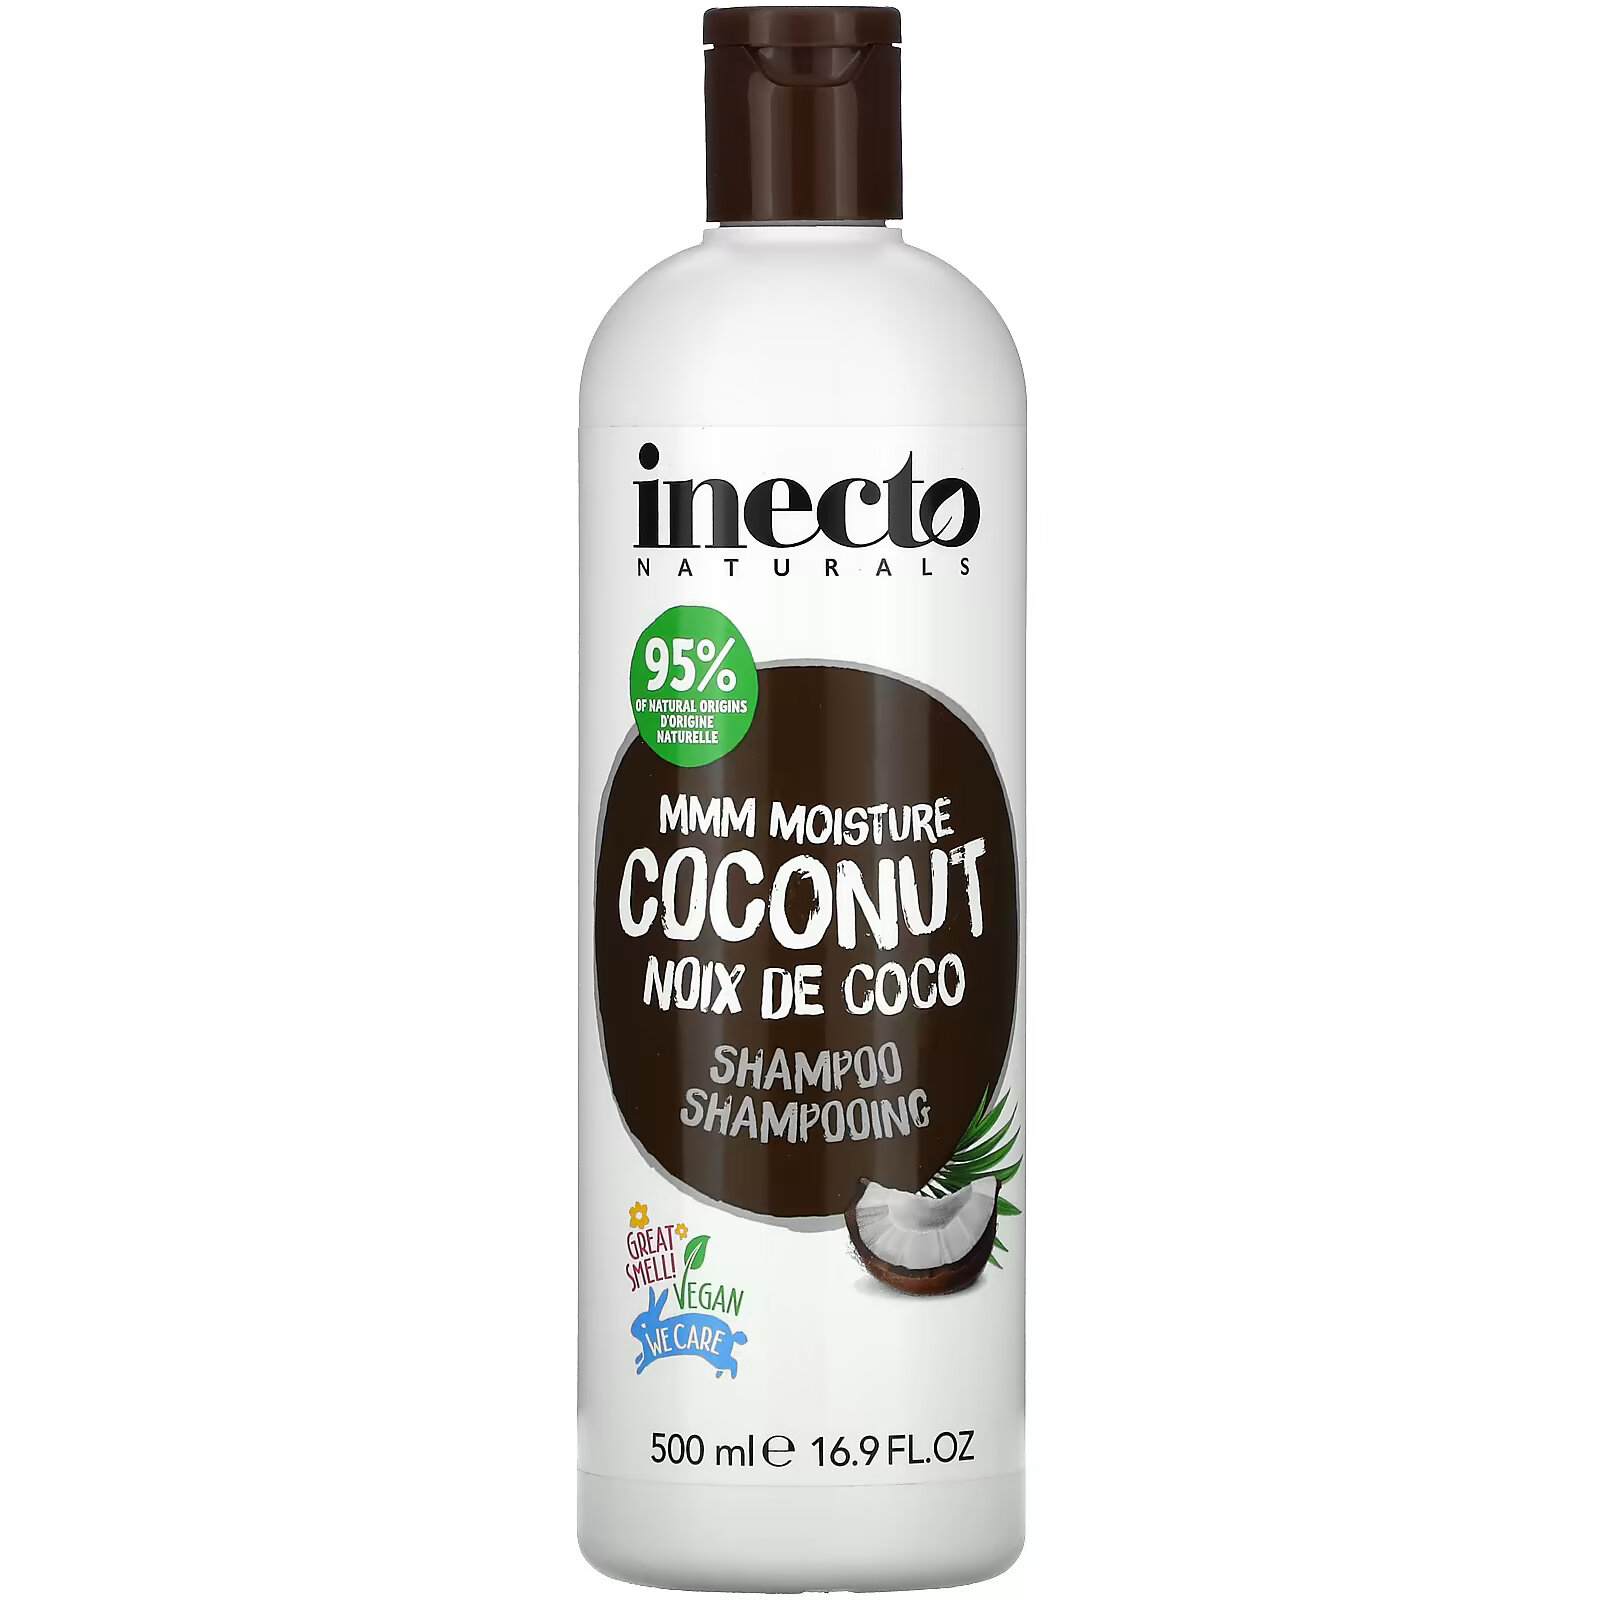 Inecto, Mmm Moisture Coconut, шампунь, 500 мл (16,9 жидких унций) inecto mmm moisture coconut шампунь 500 мл 16 9 жидких унций